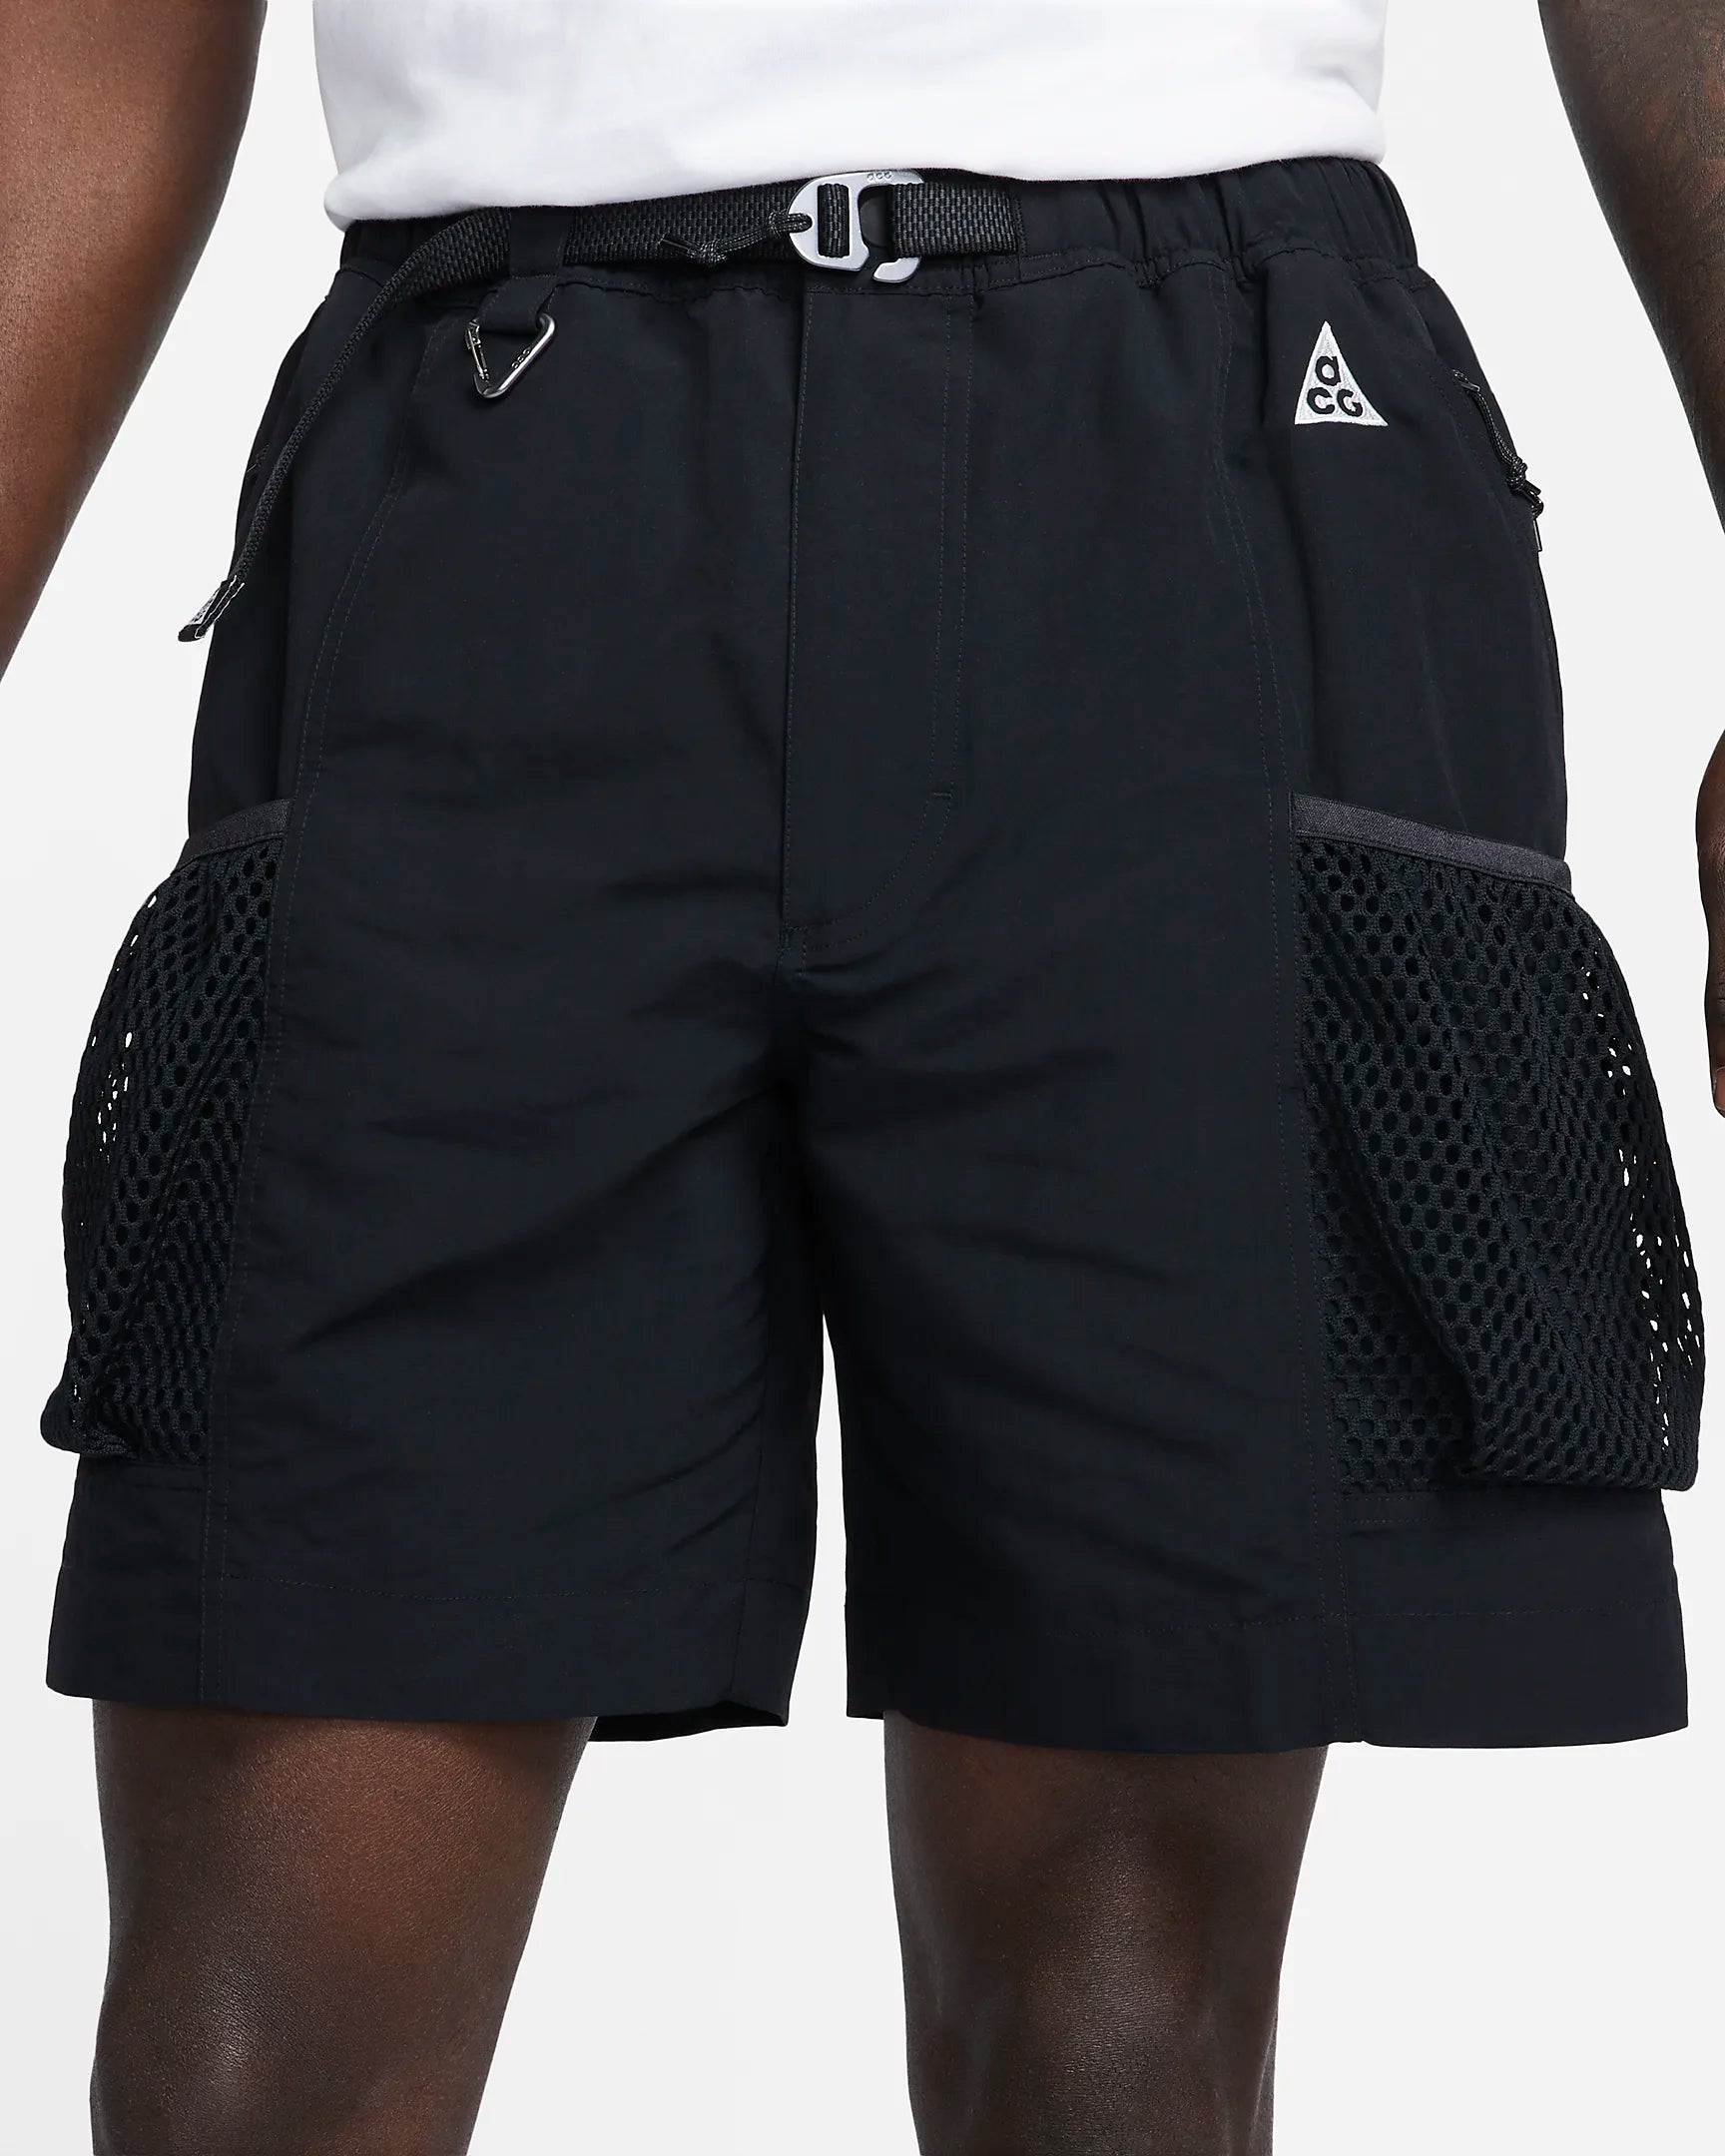 Nike ACG 'Snowgrass' Men's Cargo Shorts